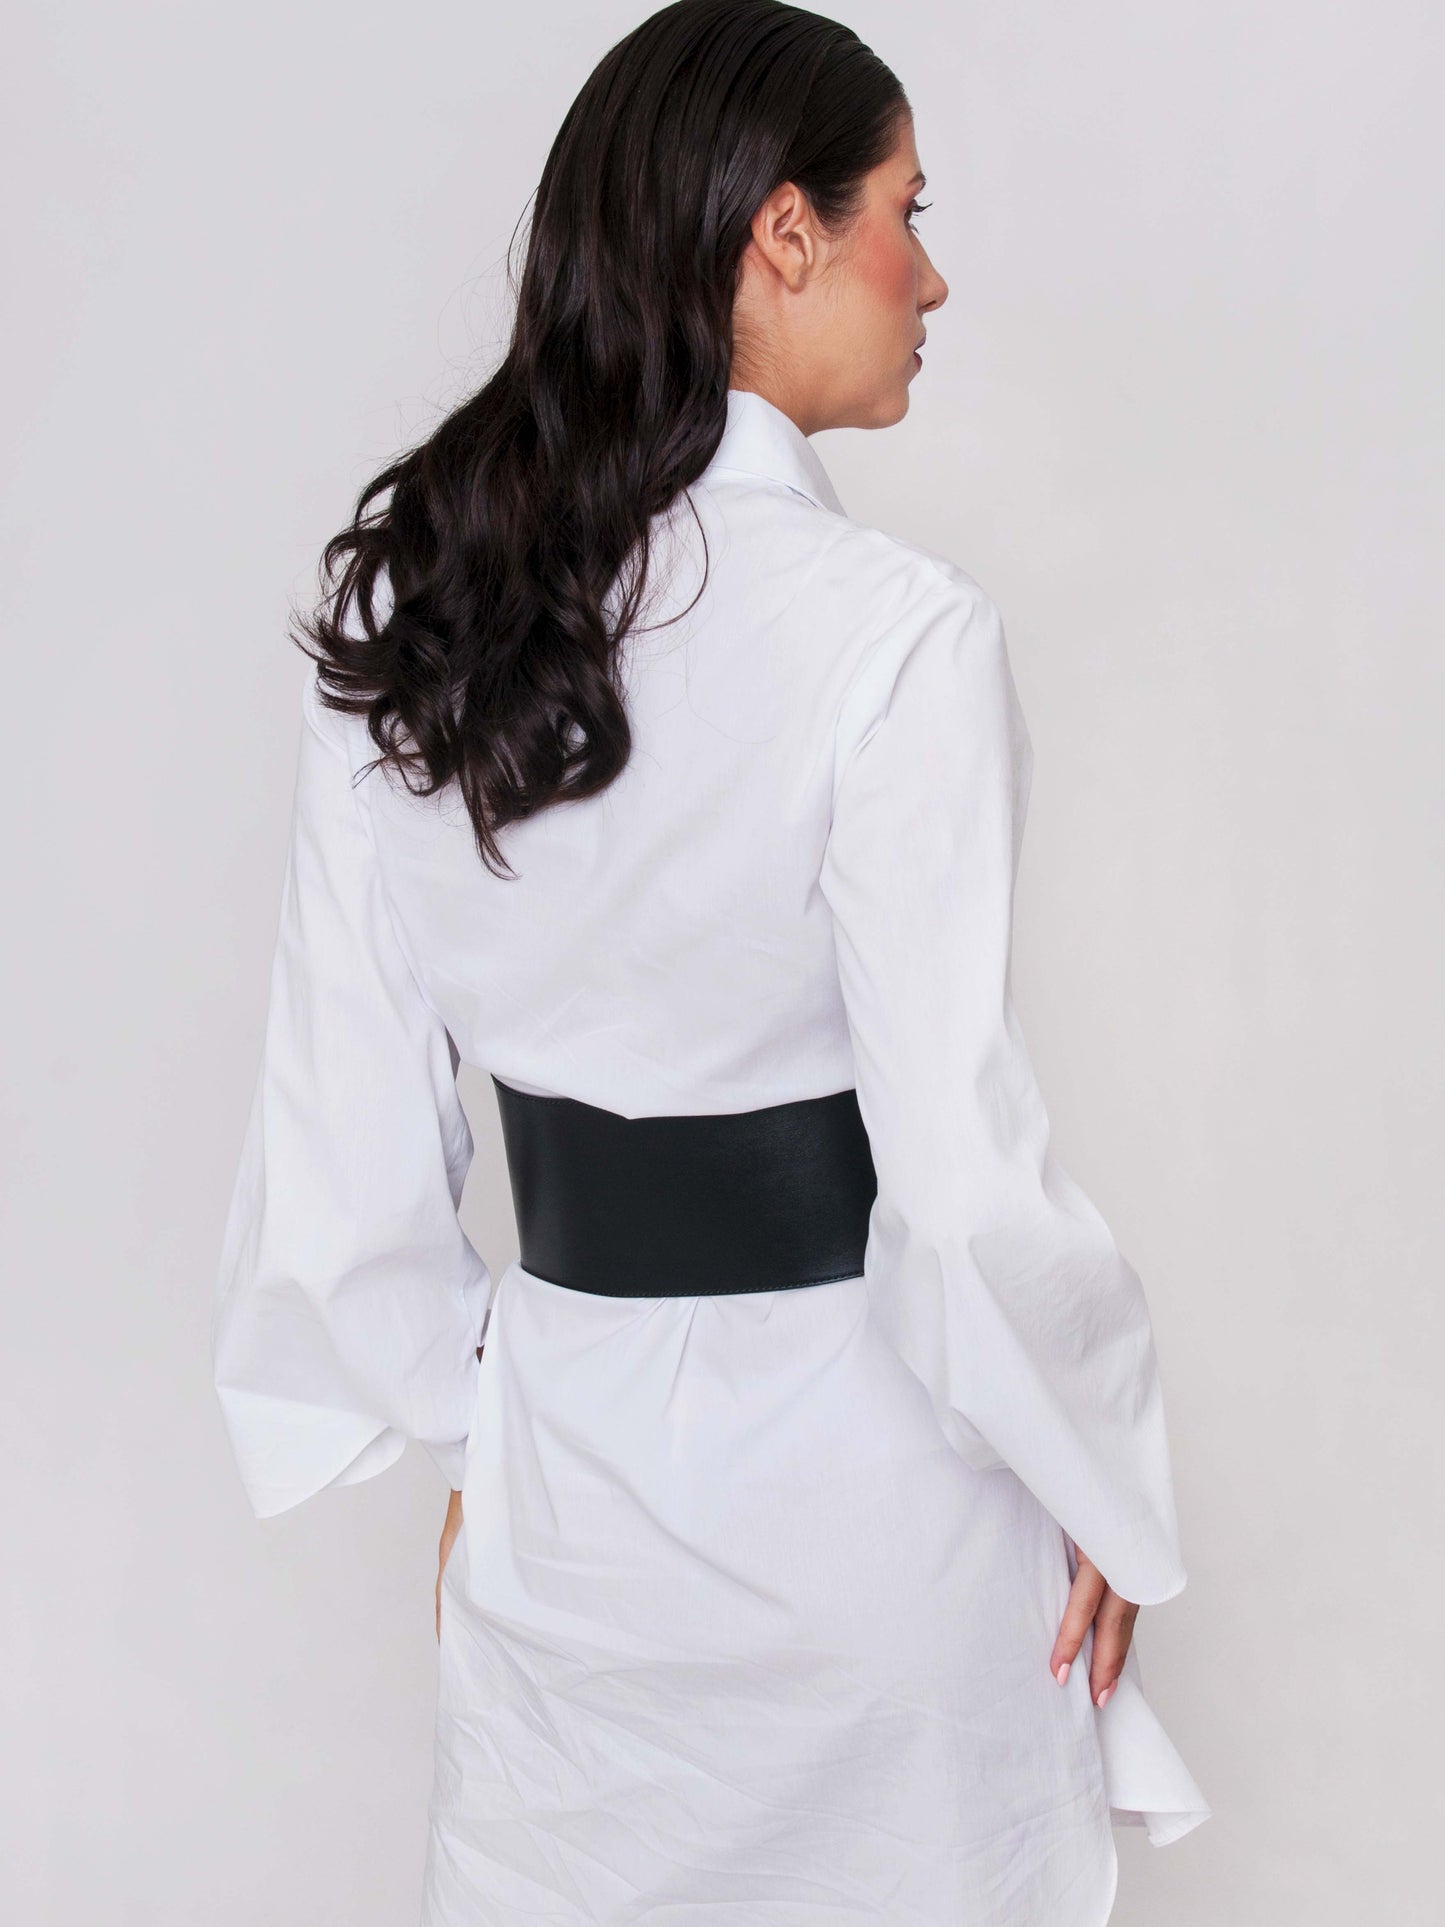 Back view of wide waist belt worn by woman over a white shirt dress.